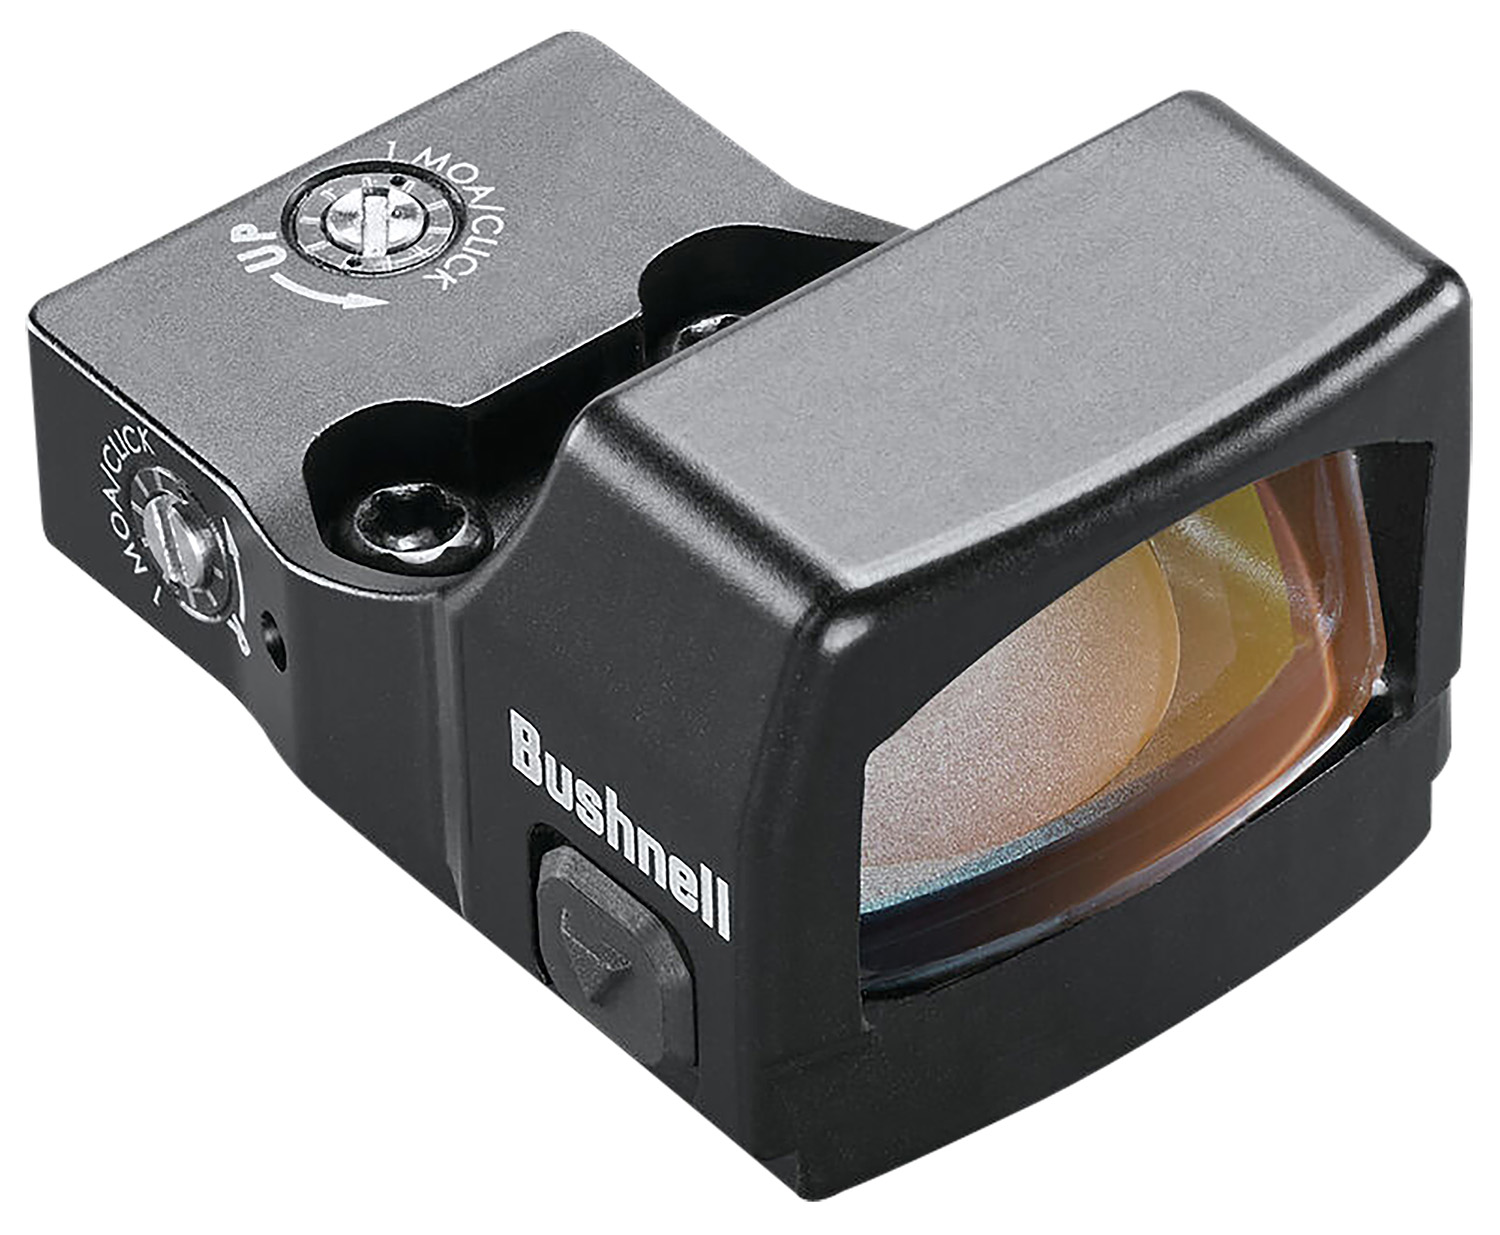 Bushnell RXS250 RXS-250 Reflex Sight Black 1x24mm 4 MOA Red Dot Reticle